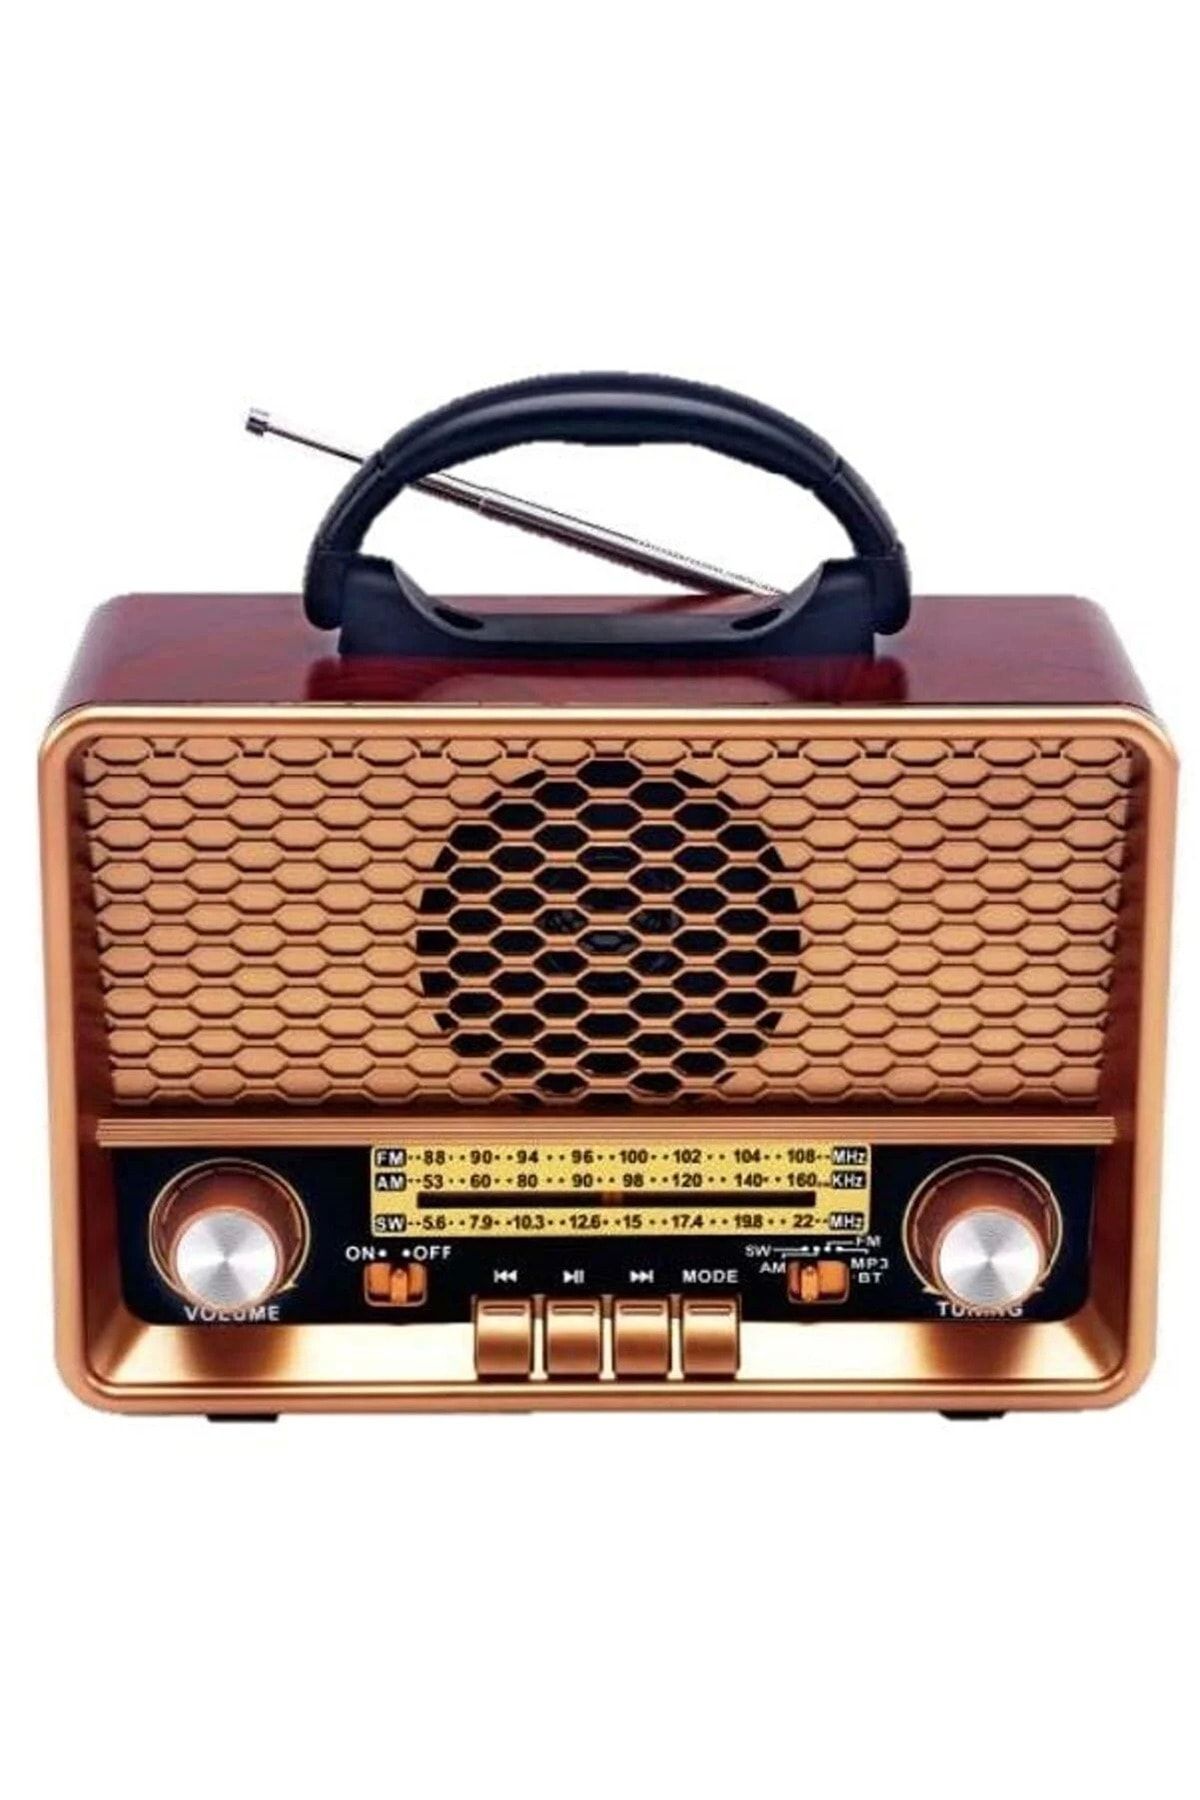 Concord R7188bt Retro Nostaljik Radyo Usb & Tf & Aux Girişli Led Fenerli Bluetooth Hoparlör